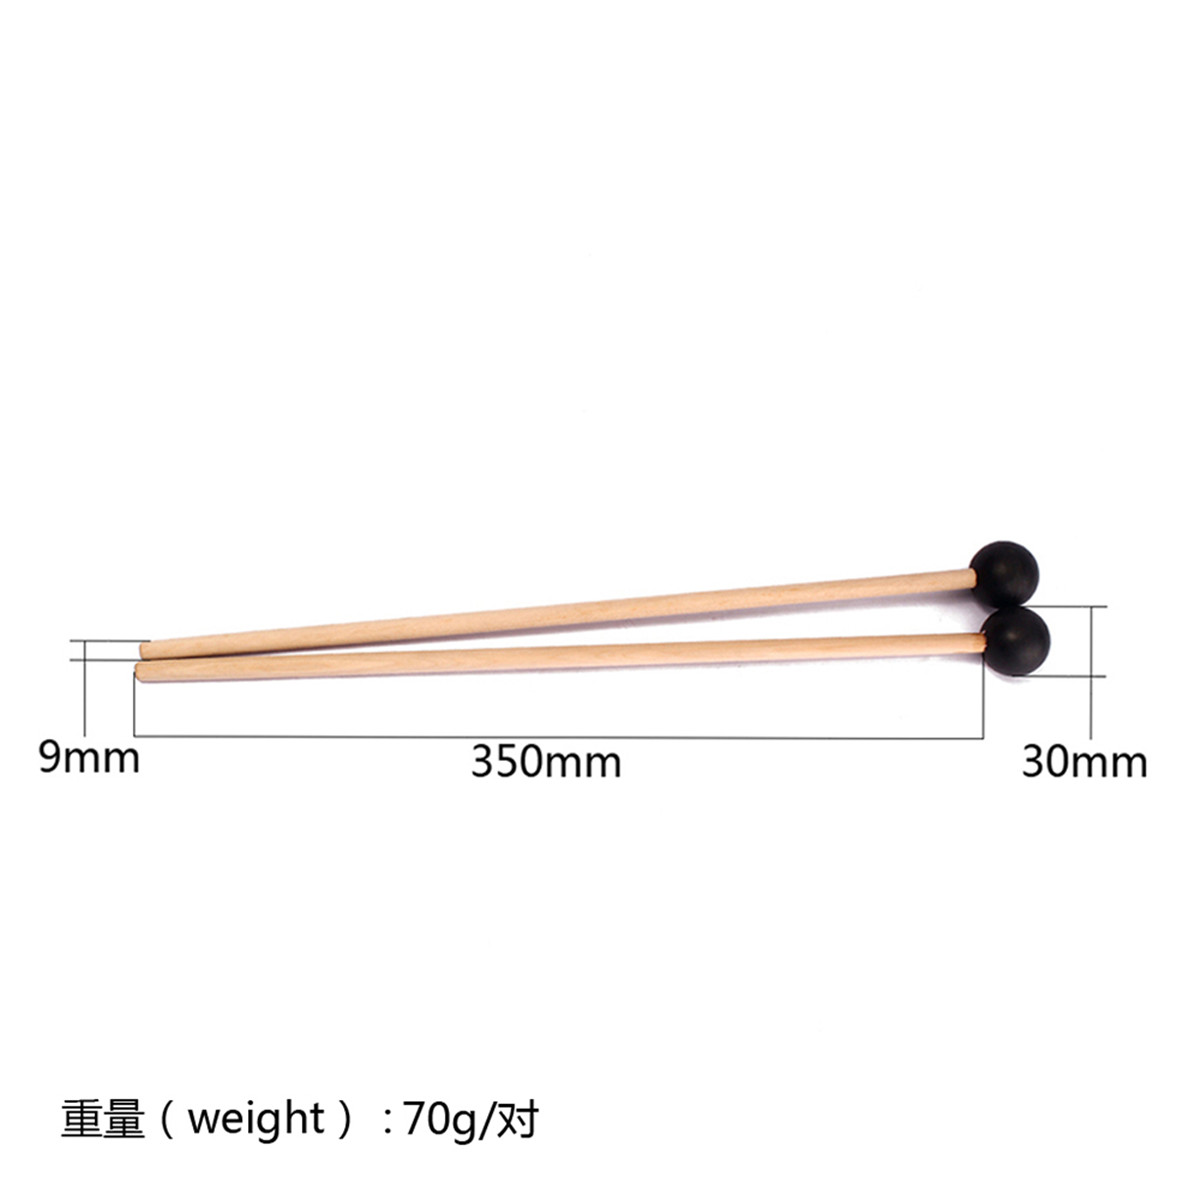 2x-Drum-Sticks-Big-Head-Drumsticks-Maple-Wood-for-Percussion-Instruments-1373226